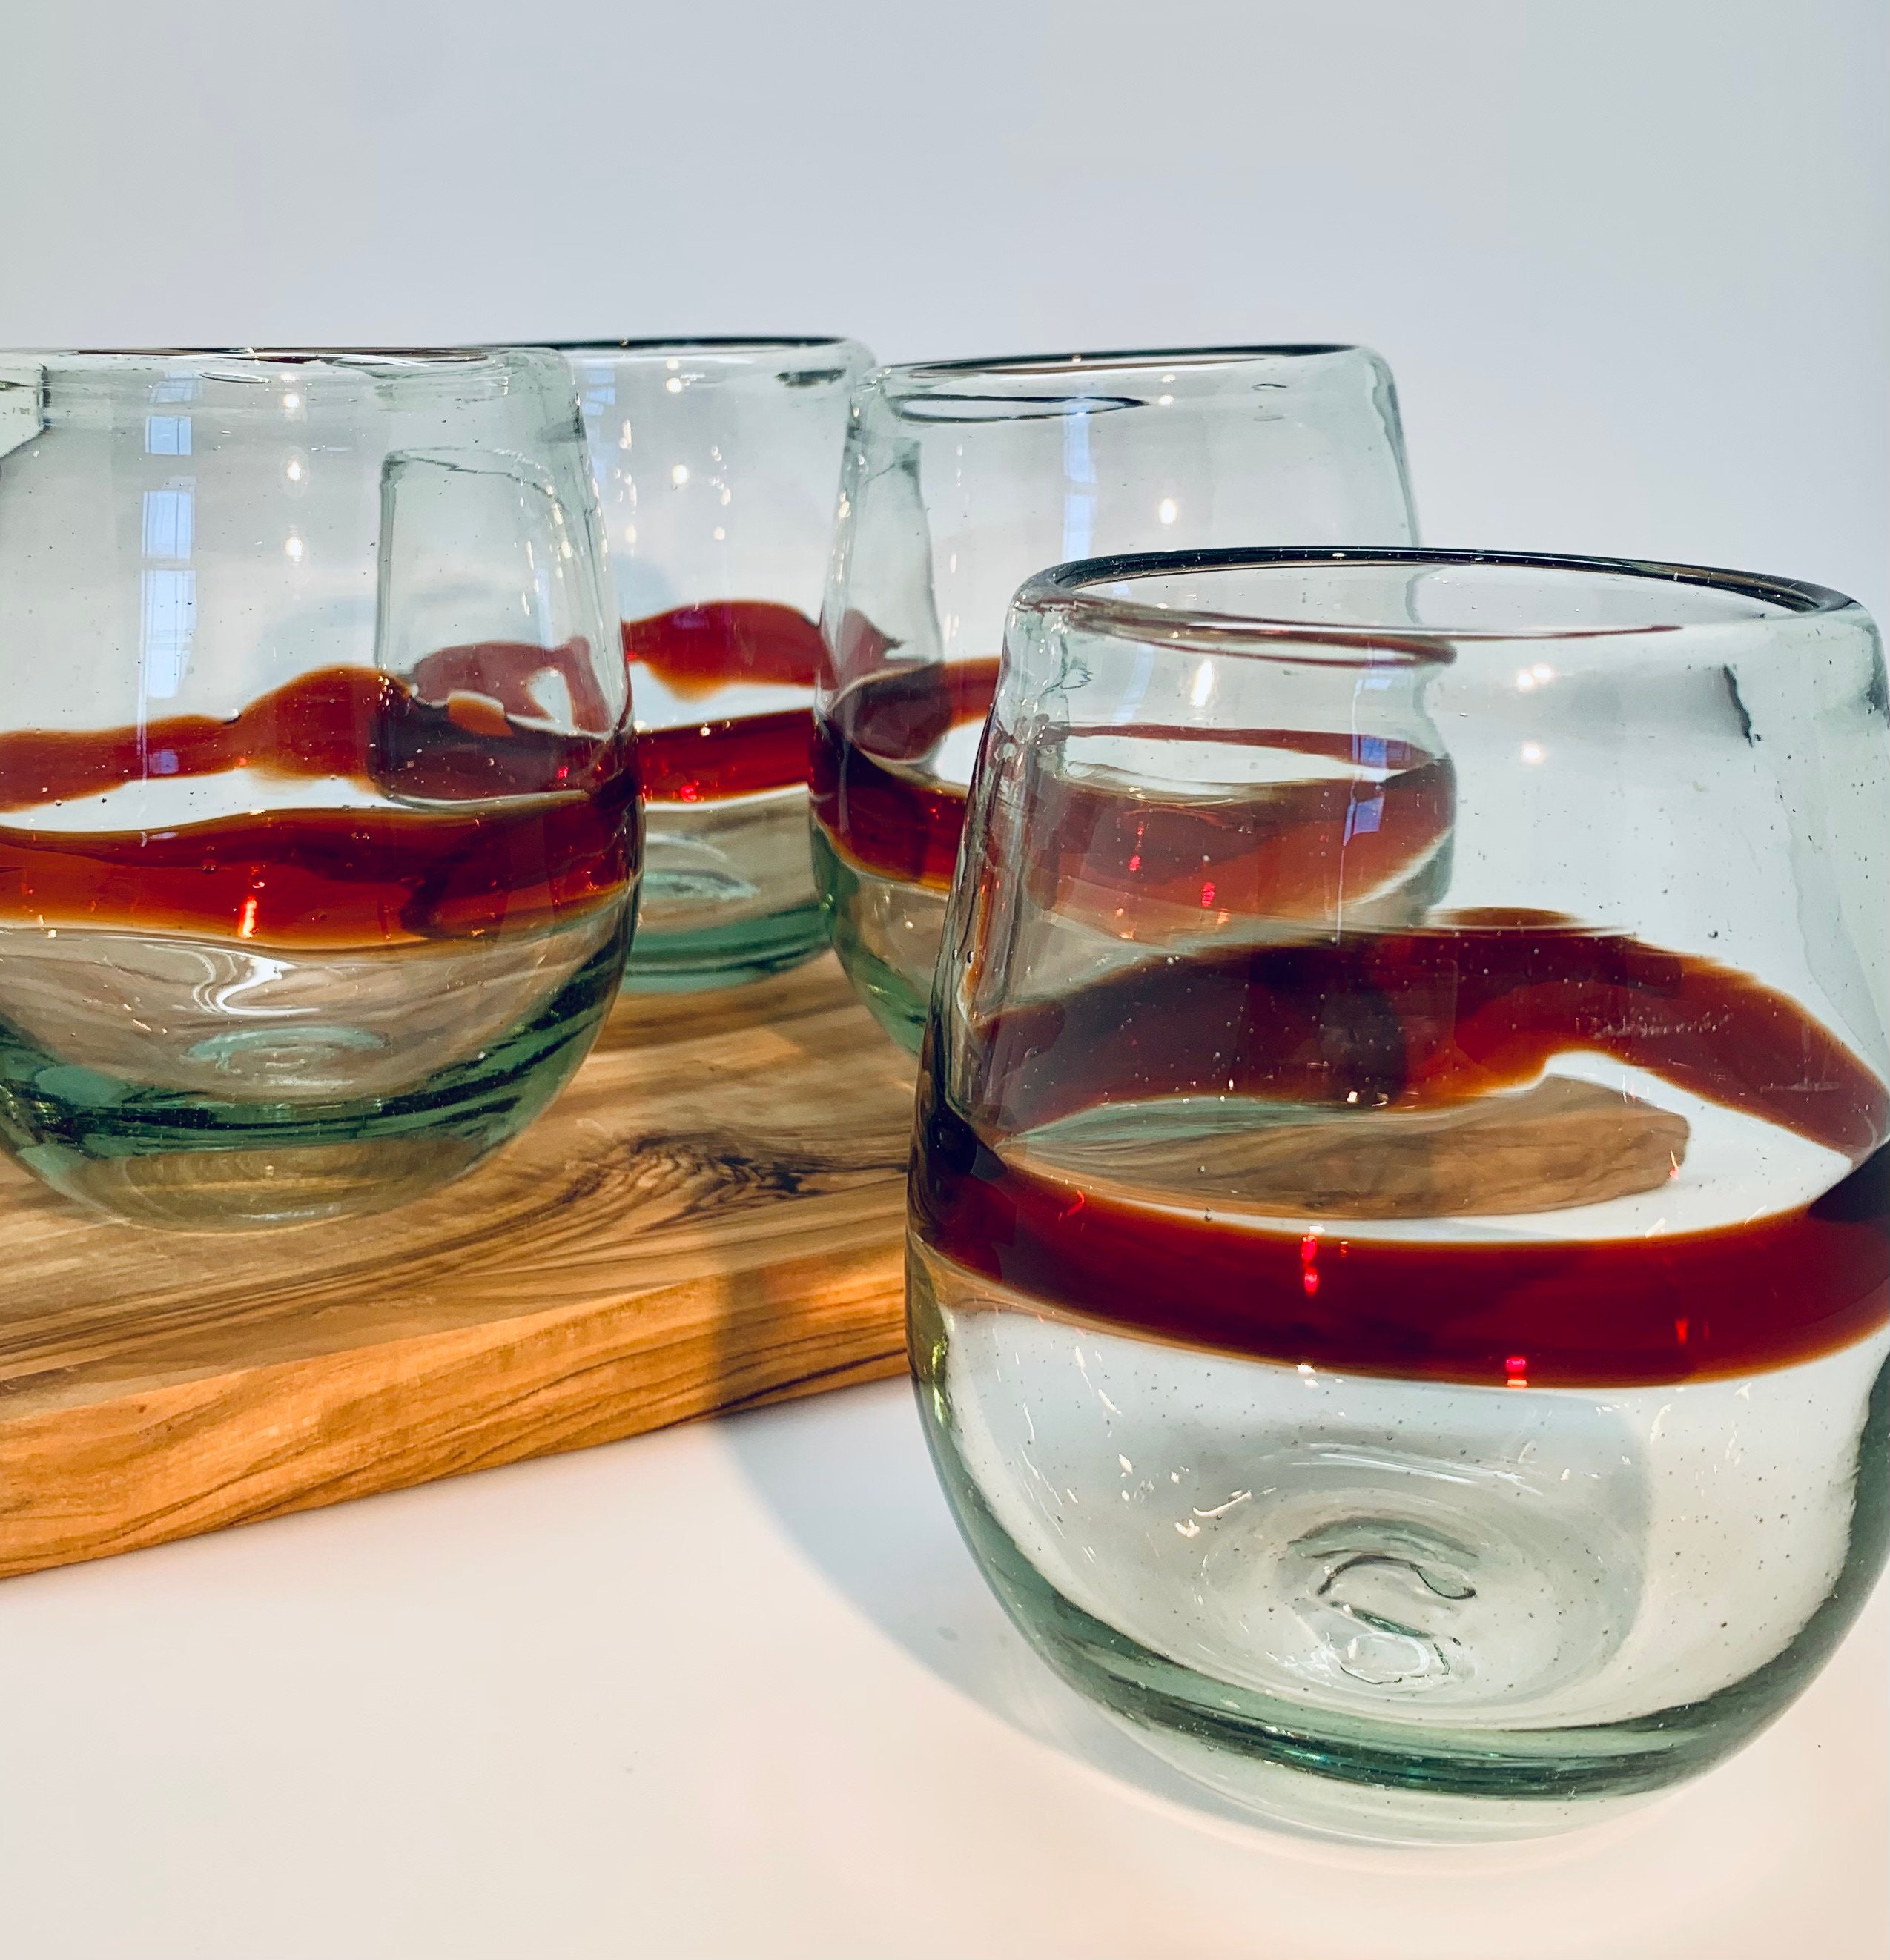 Peanuts 2-Piece Stemless Wine Glass Set